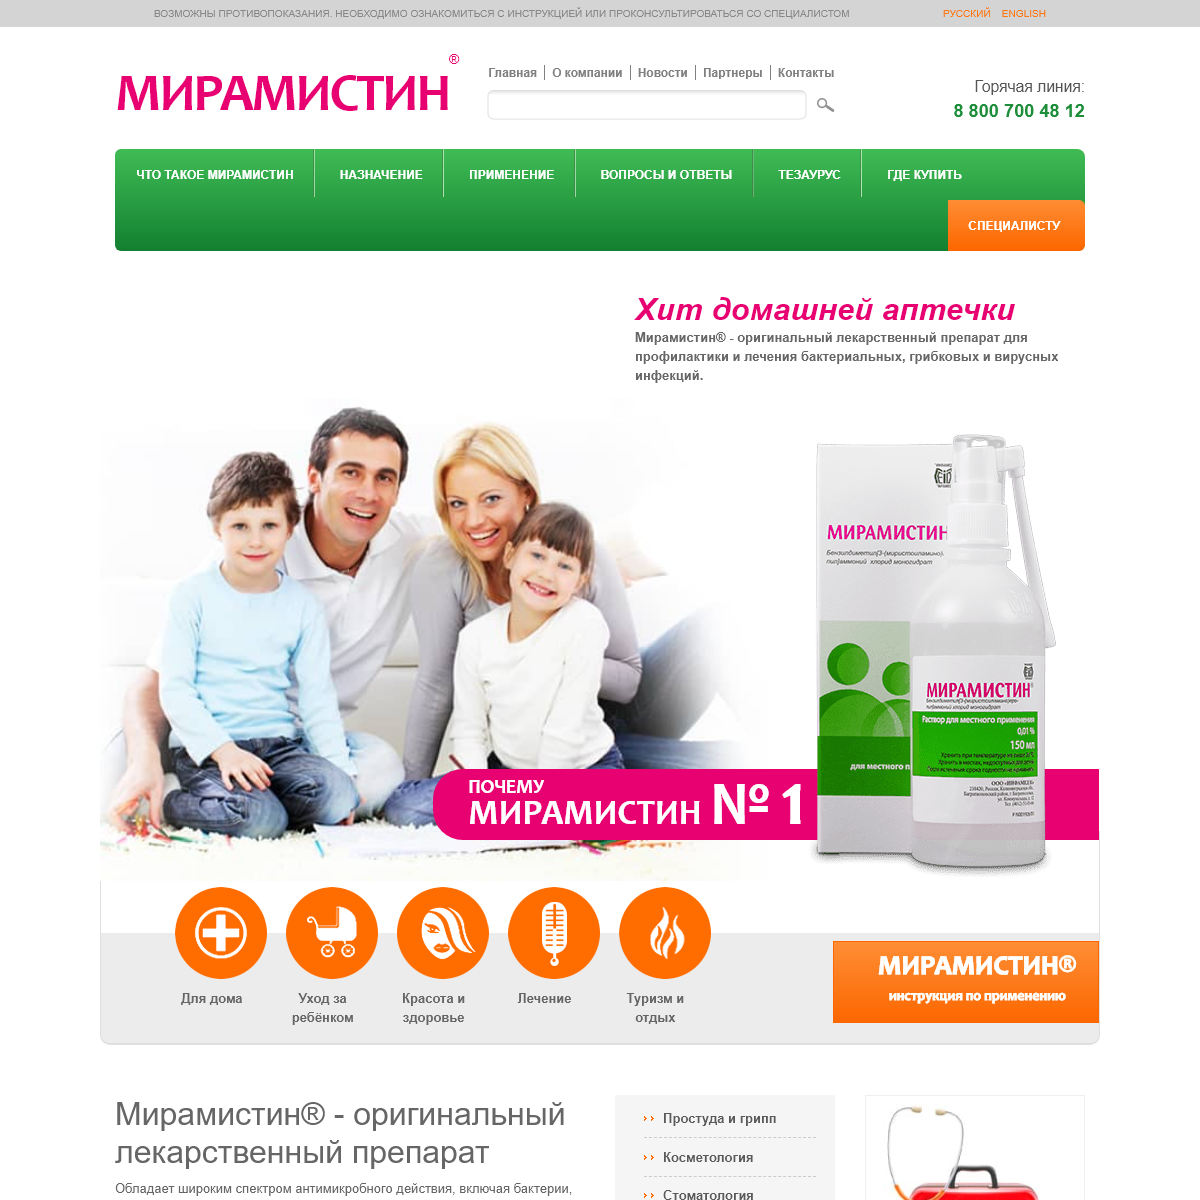 A complete backup of miramistin.ru